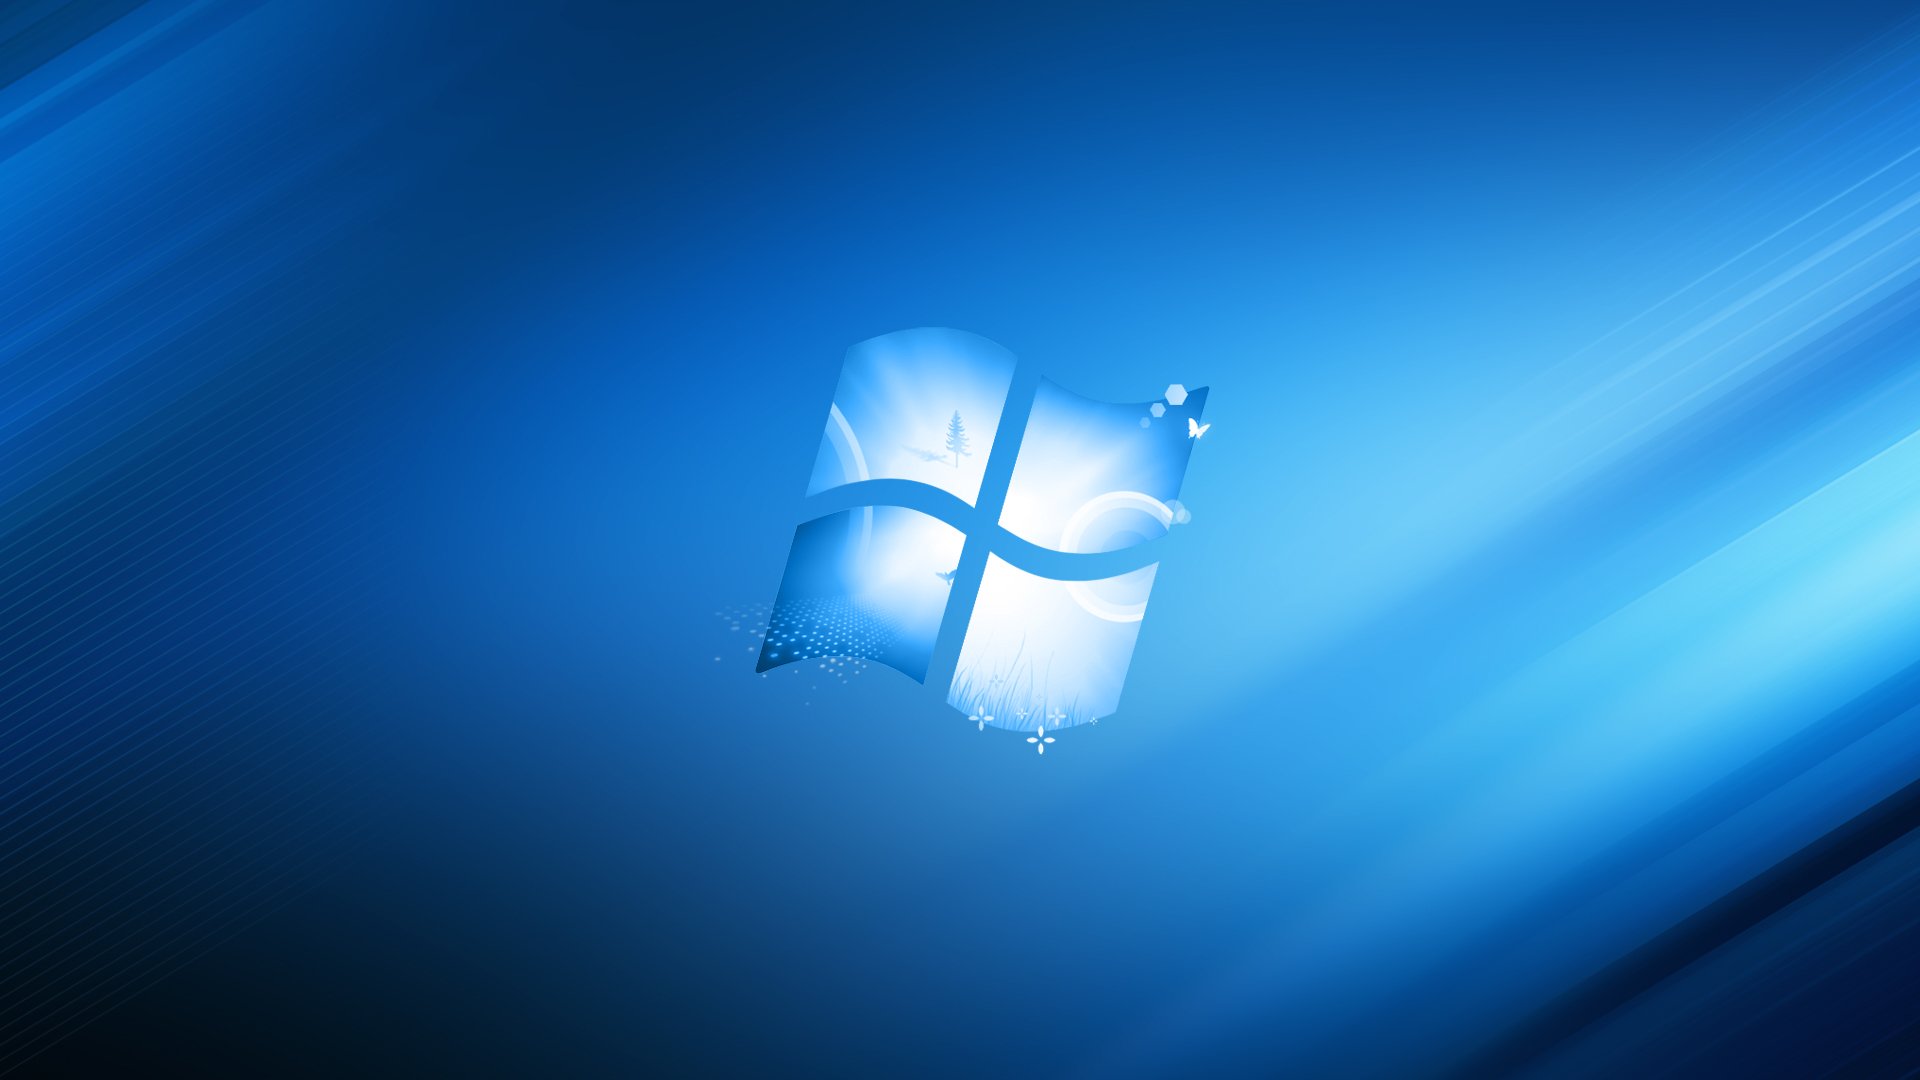 30 Best Top Collection Of Windows 8 Wallpaper   HD Downloads 1920x1080